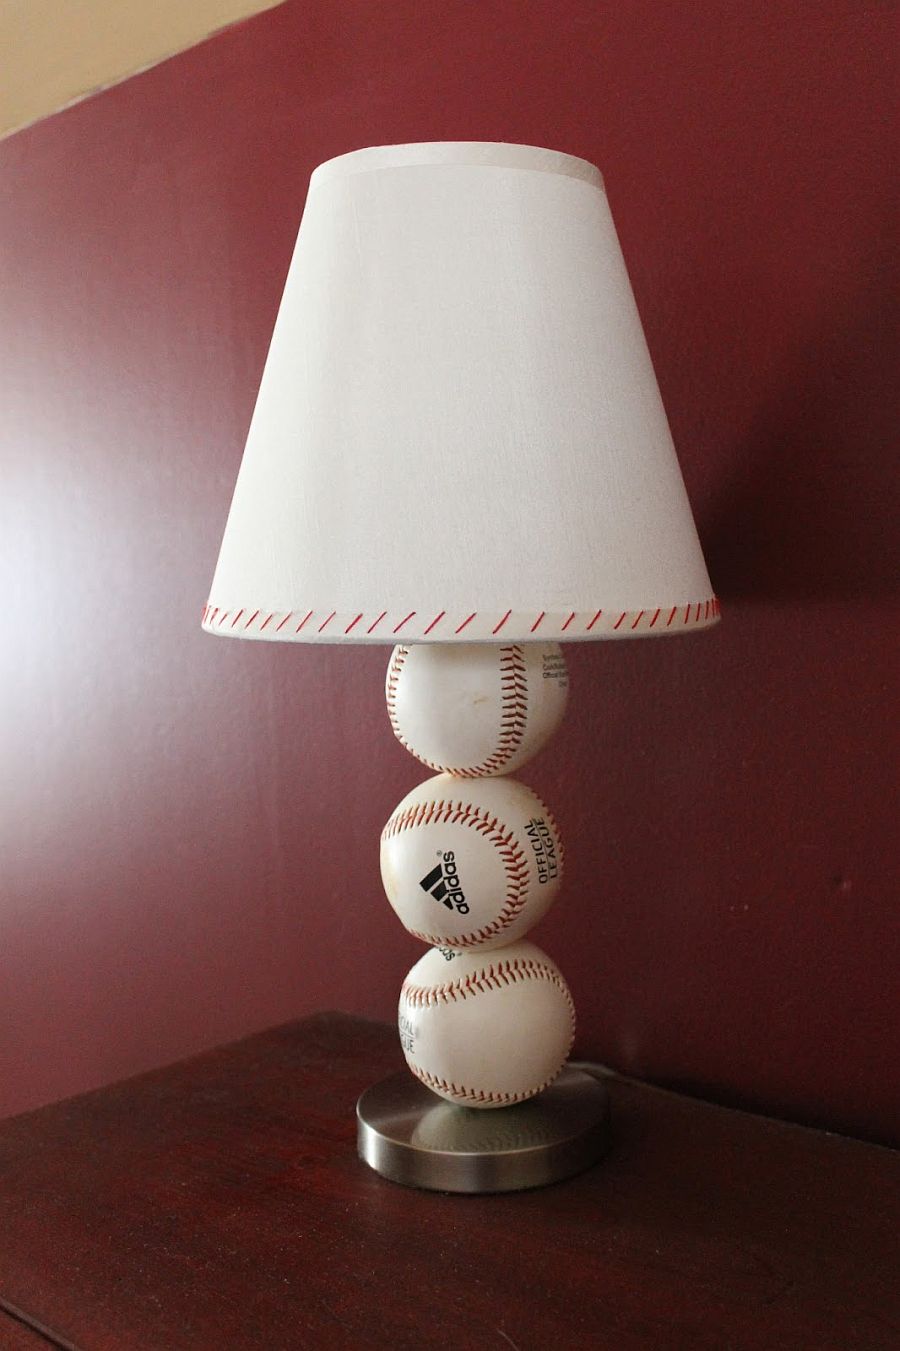 DIY Baseball lamp